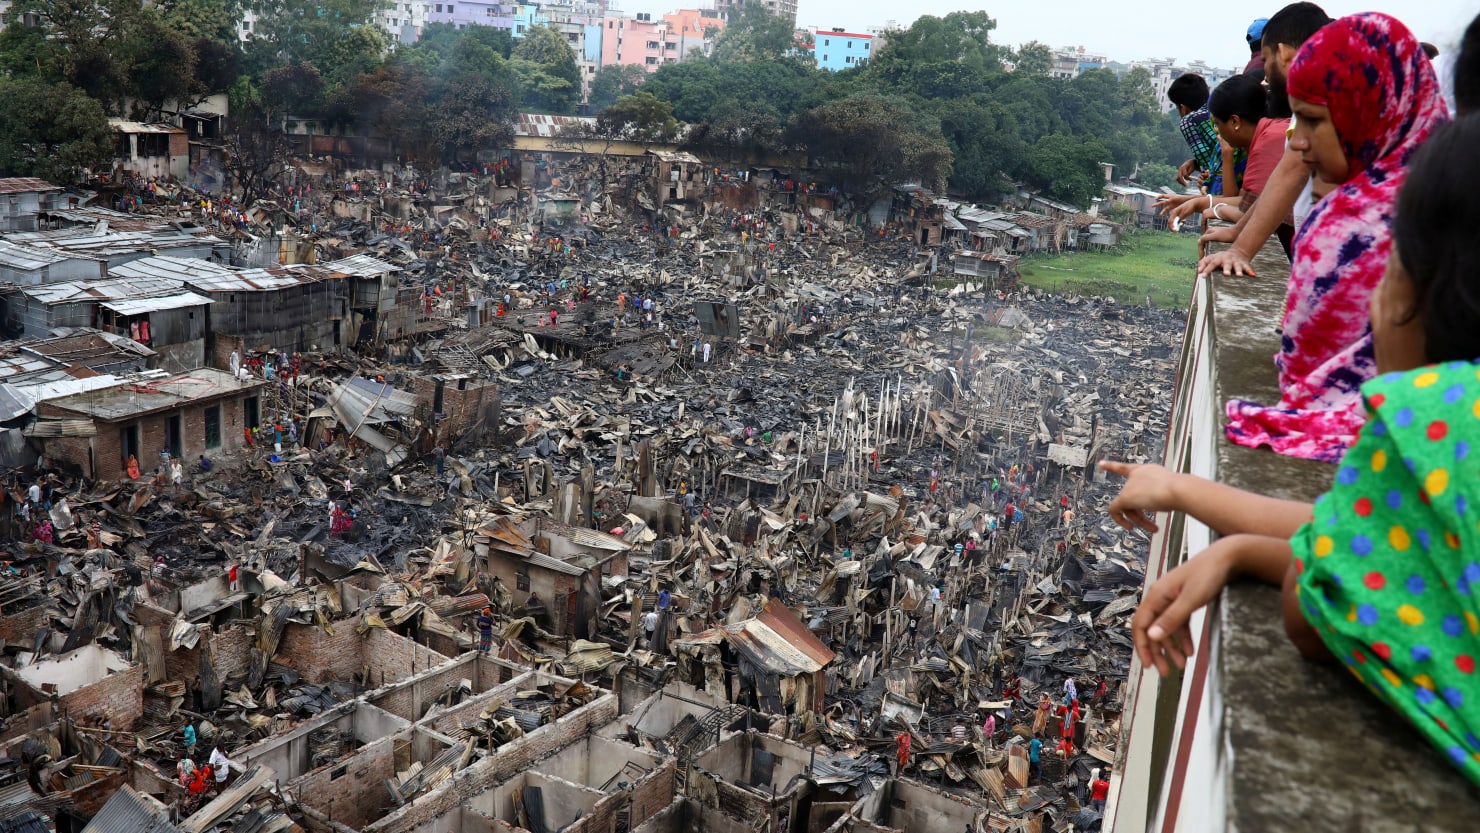 10,000 People Left Homeless After Fire Guts Dhaka, Bangladesh, Shantytown